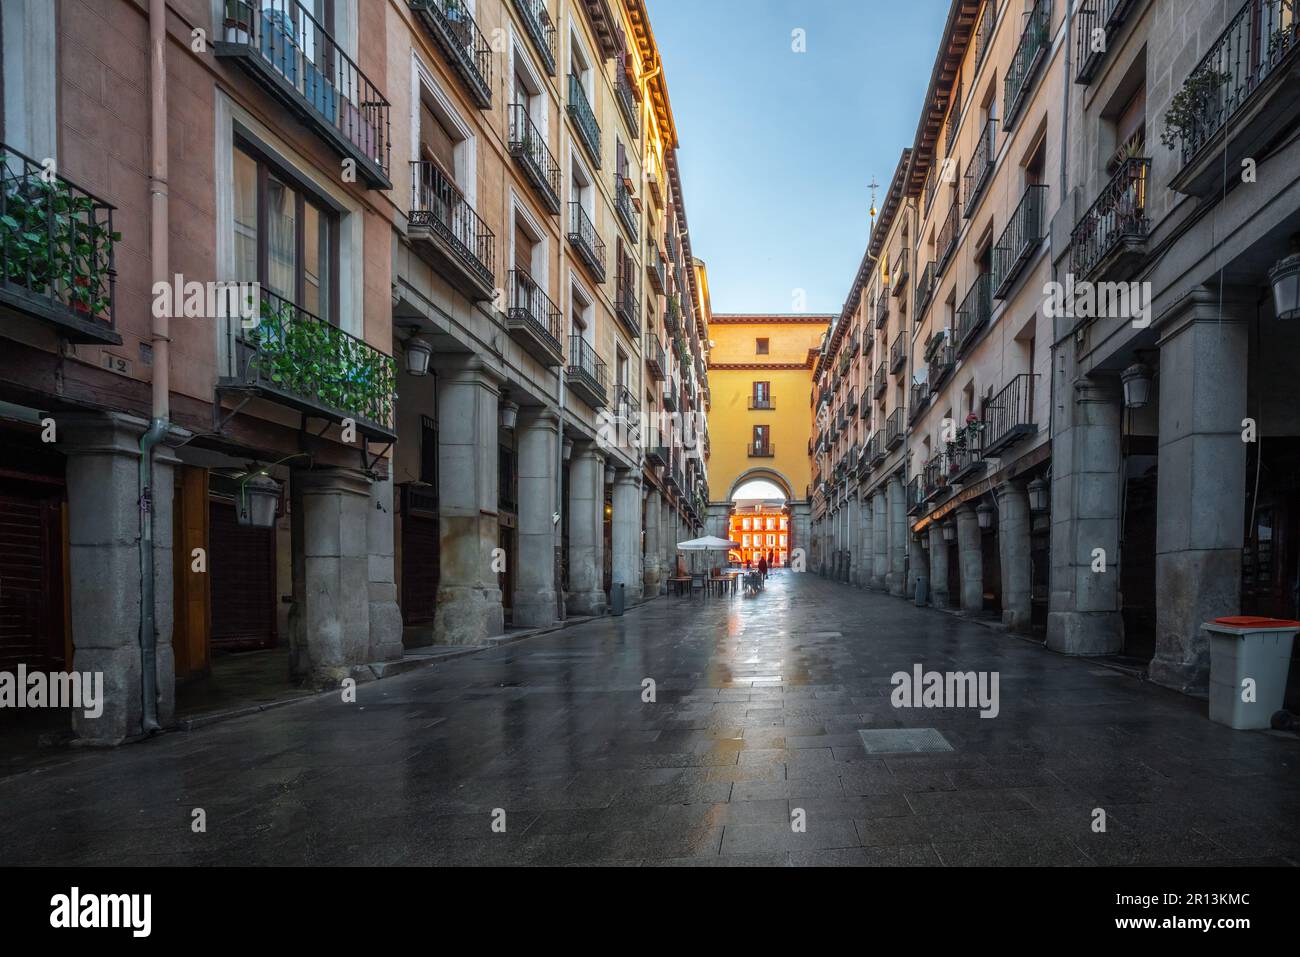 Calle de Toledo Street with Arches leading to Plaza Mayor - Madrid, Spain Stock Photo